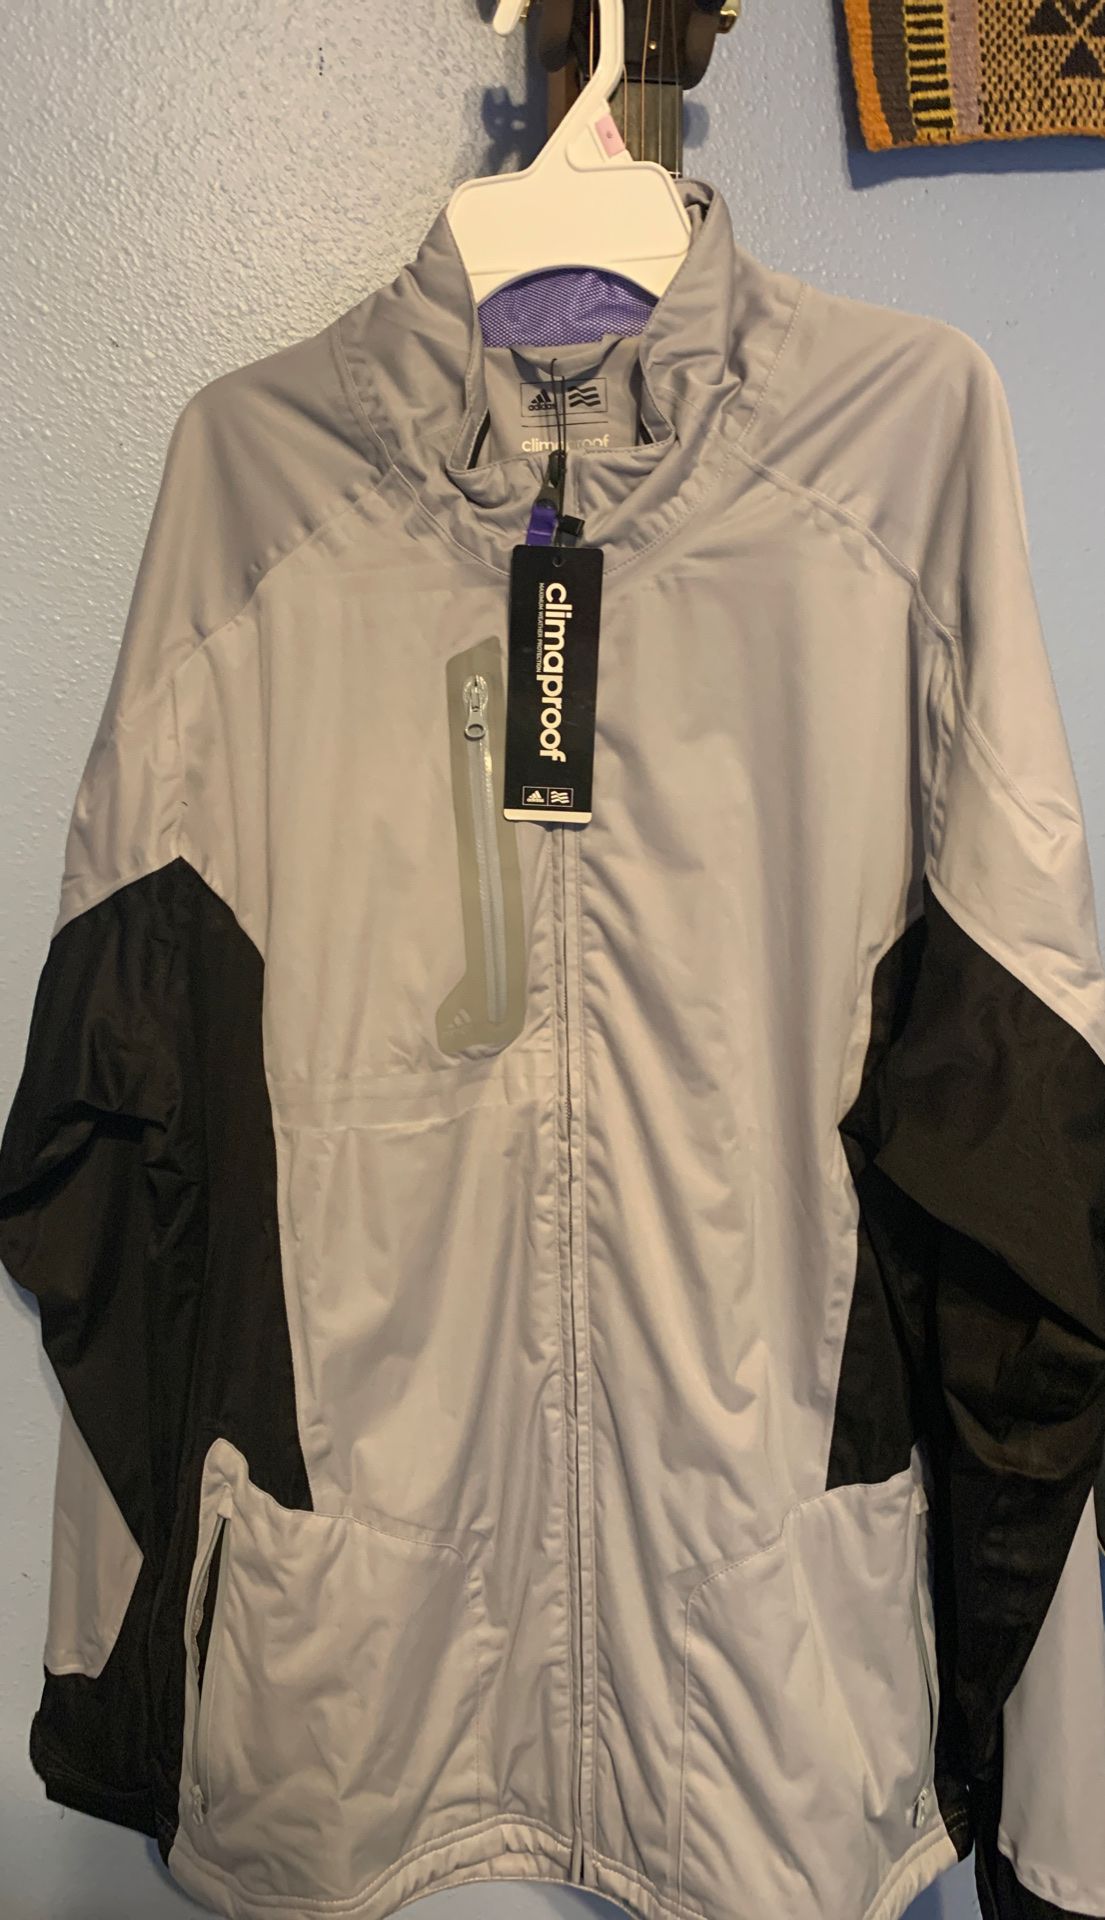 Adidas golf rain jacket - Brand New